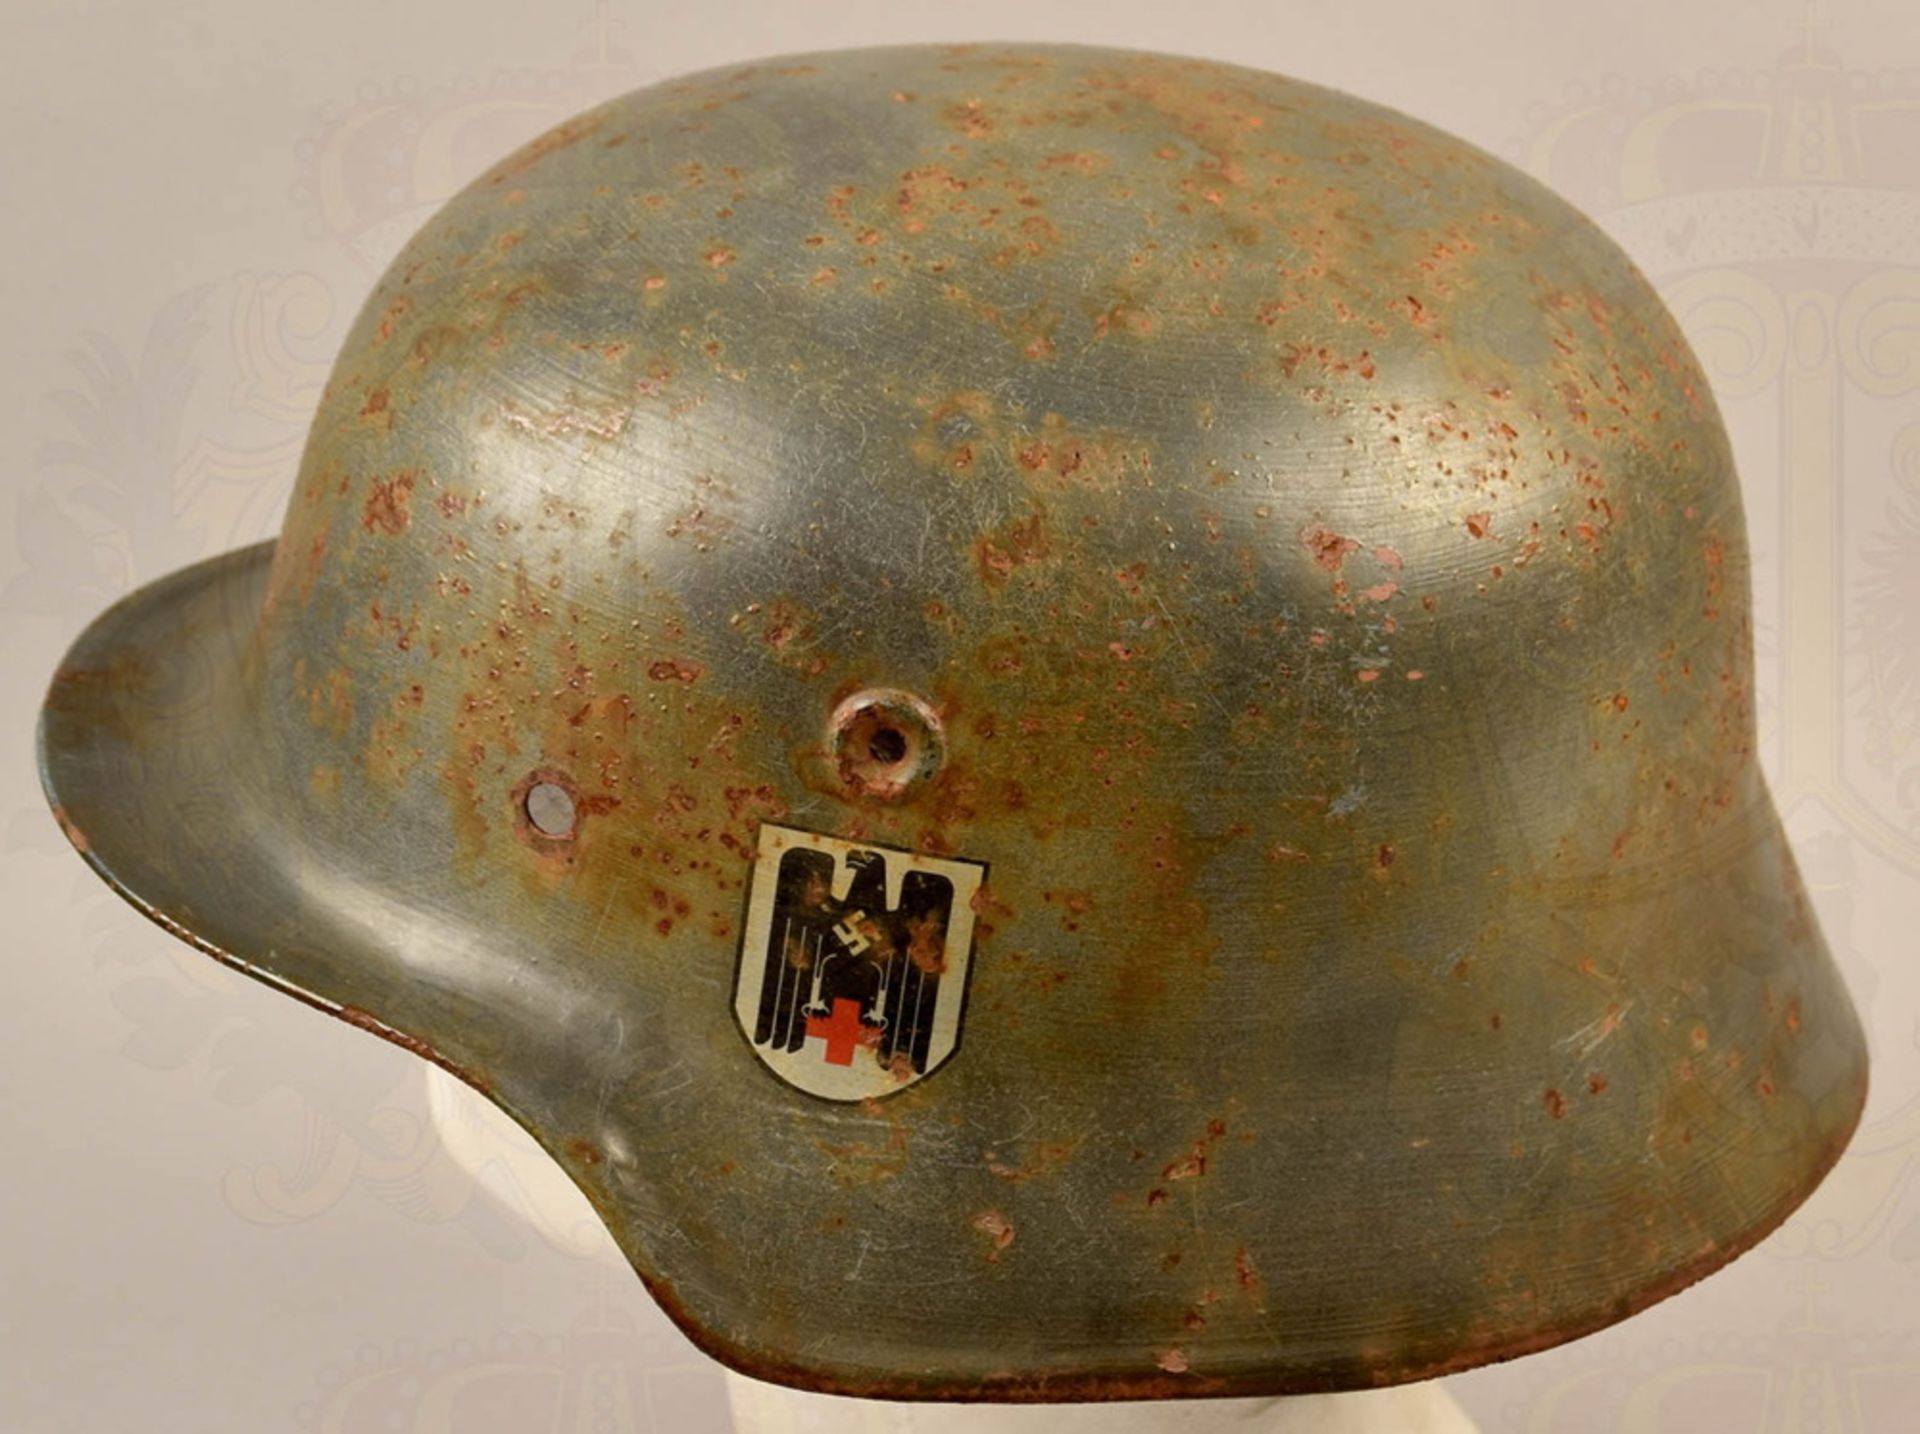 Steel helmet pattern 35/40 for Red Cross personnel - Image 5 of 10